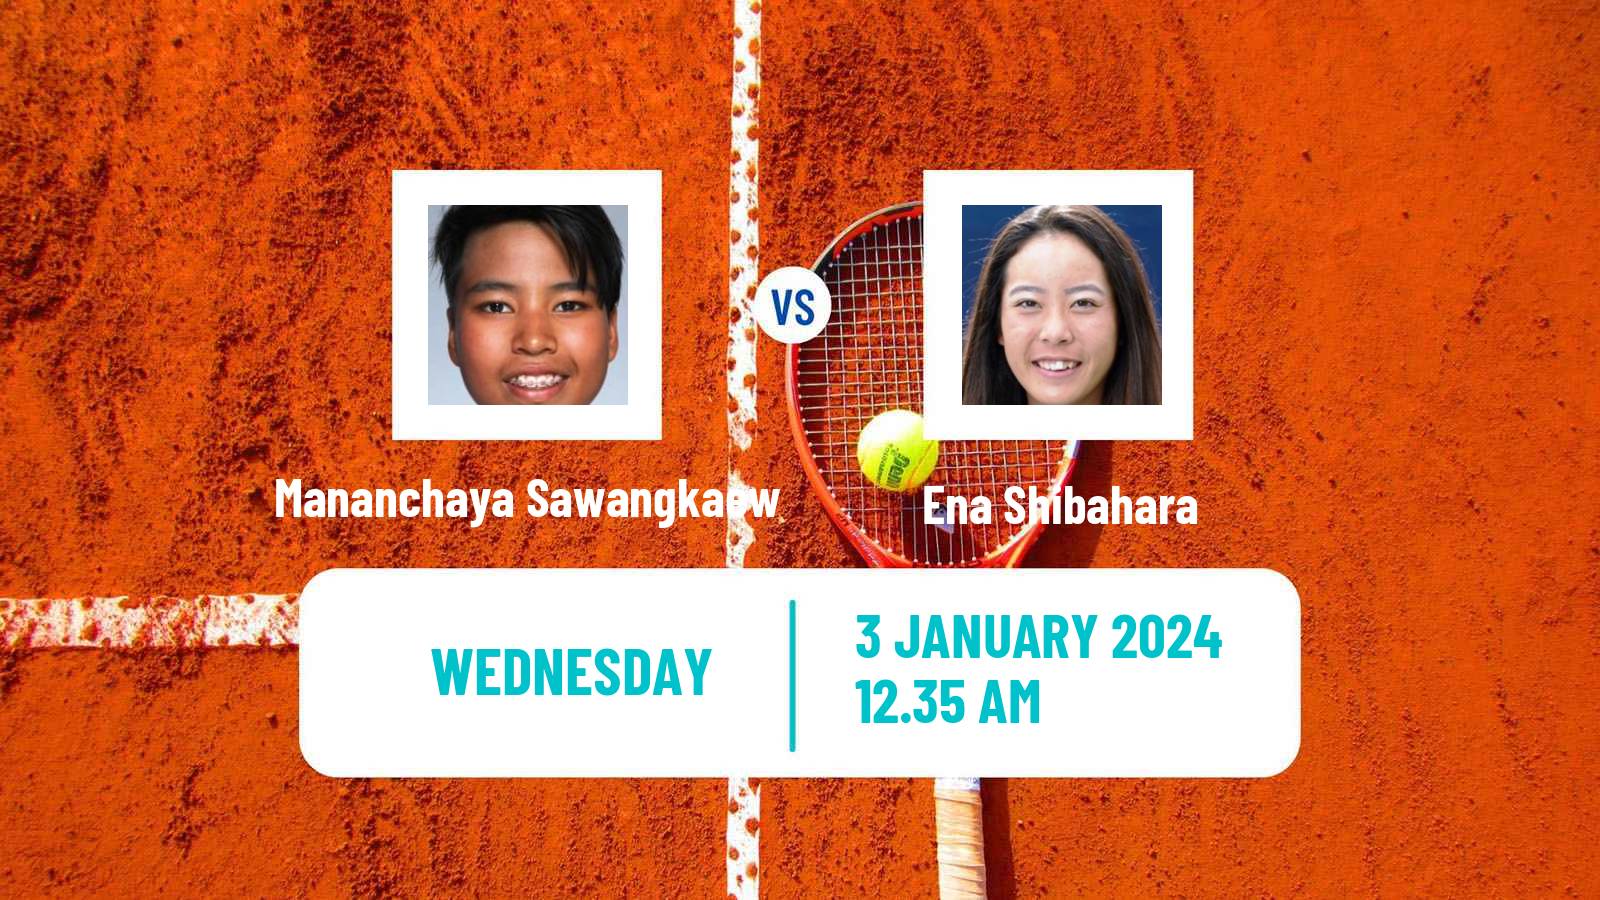 Tennis ITF W50 Nonthaburi Women Mananchaya Sawangkaew - Ena Shibahara